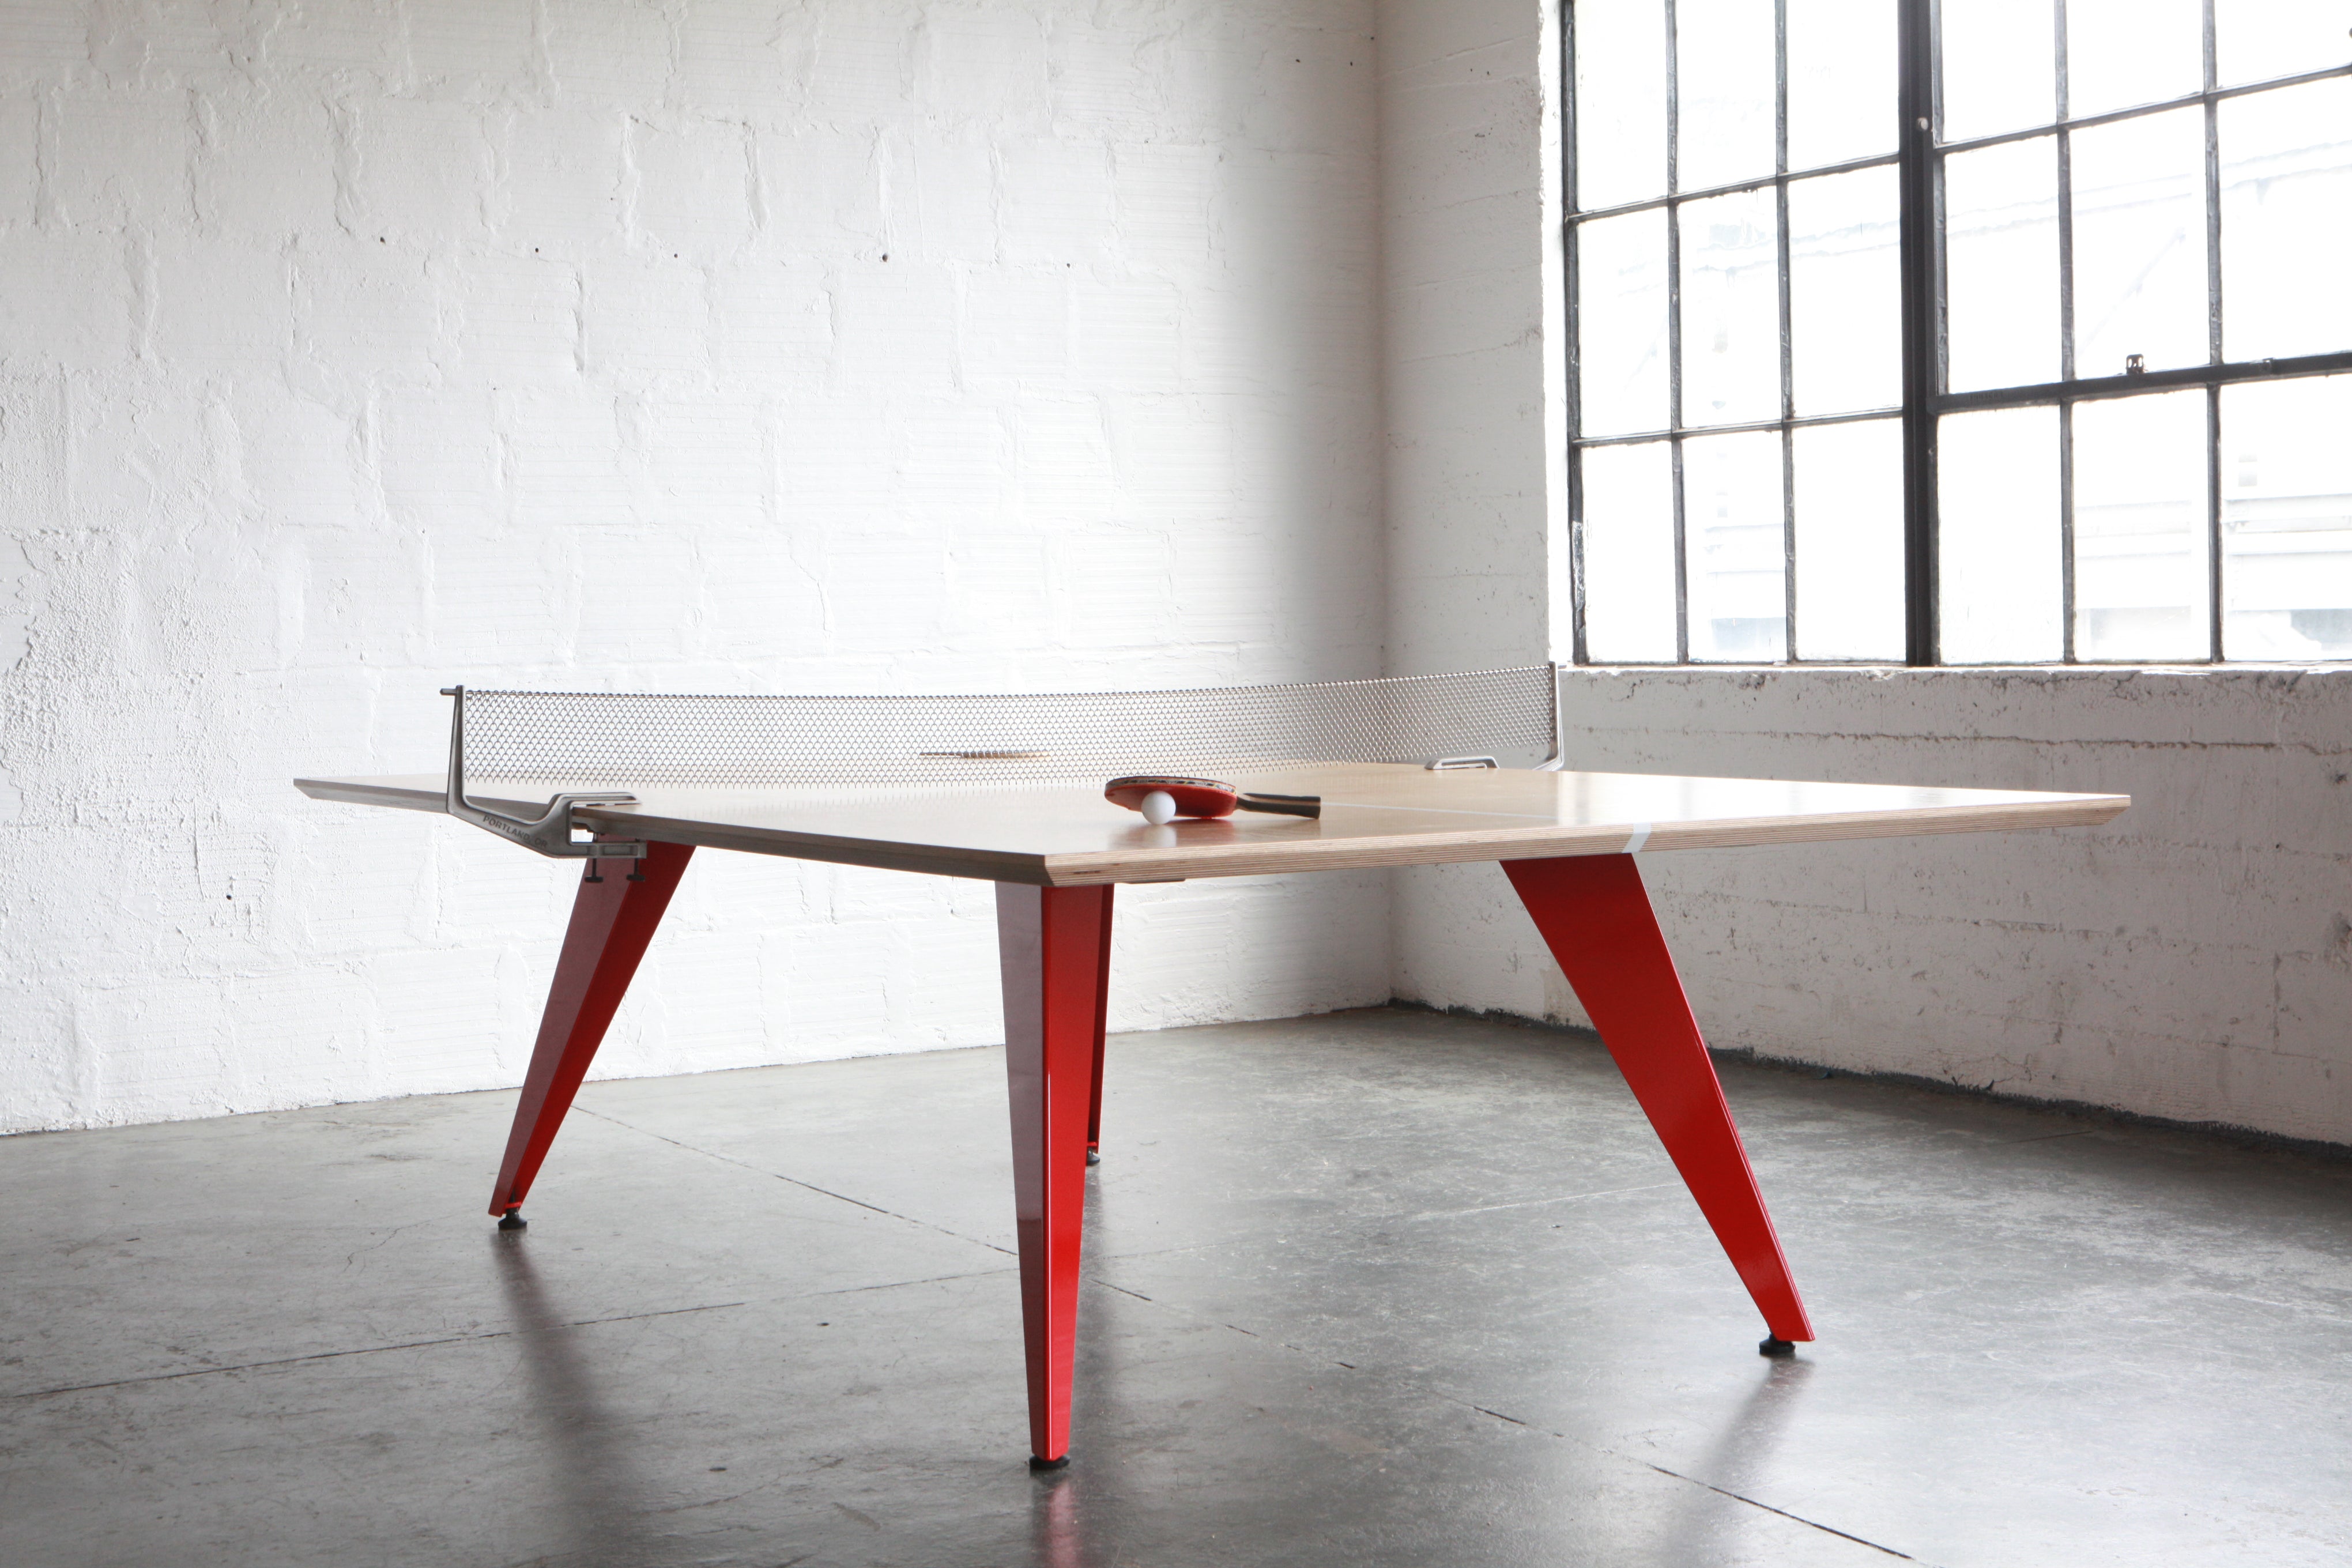  Ping Pong Table